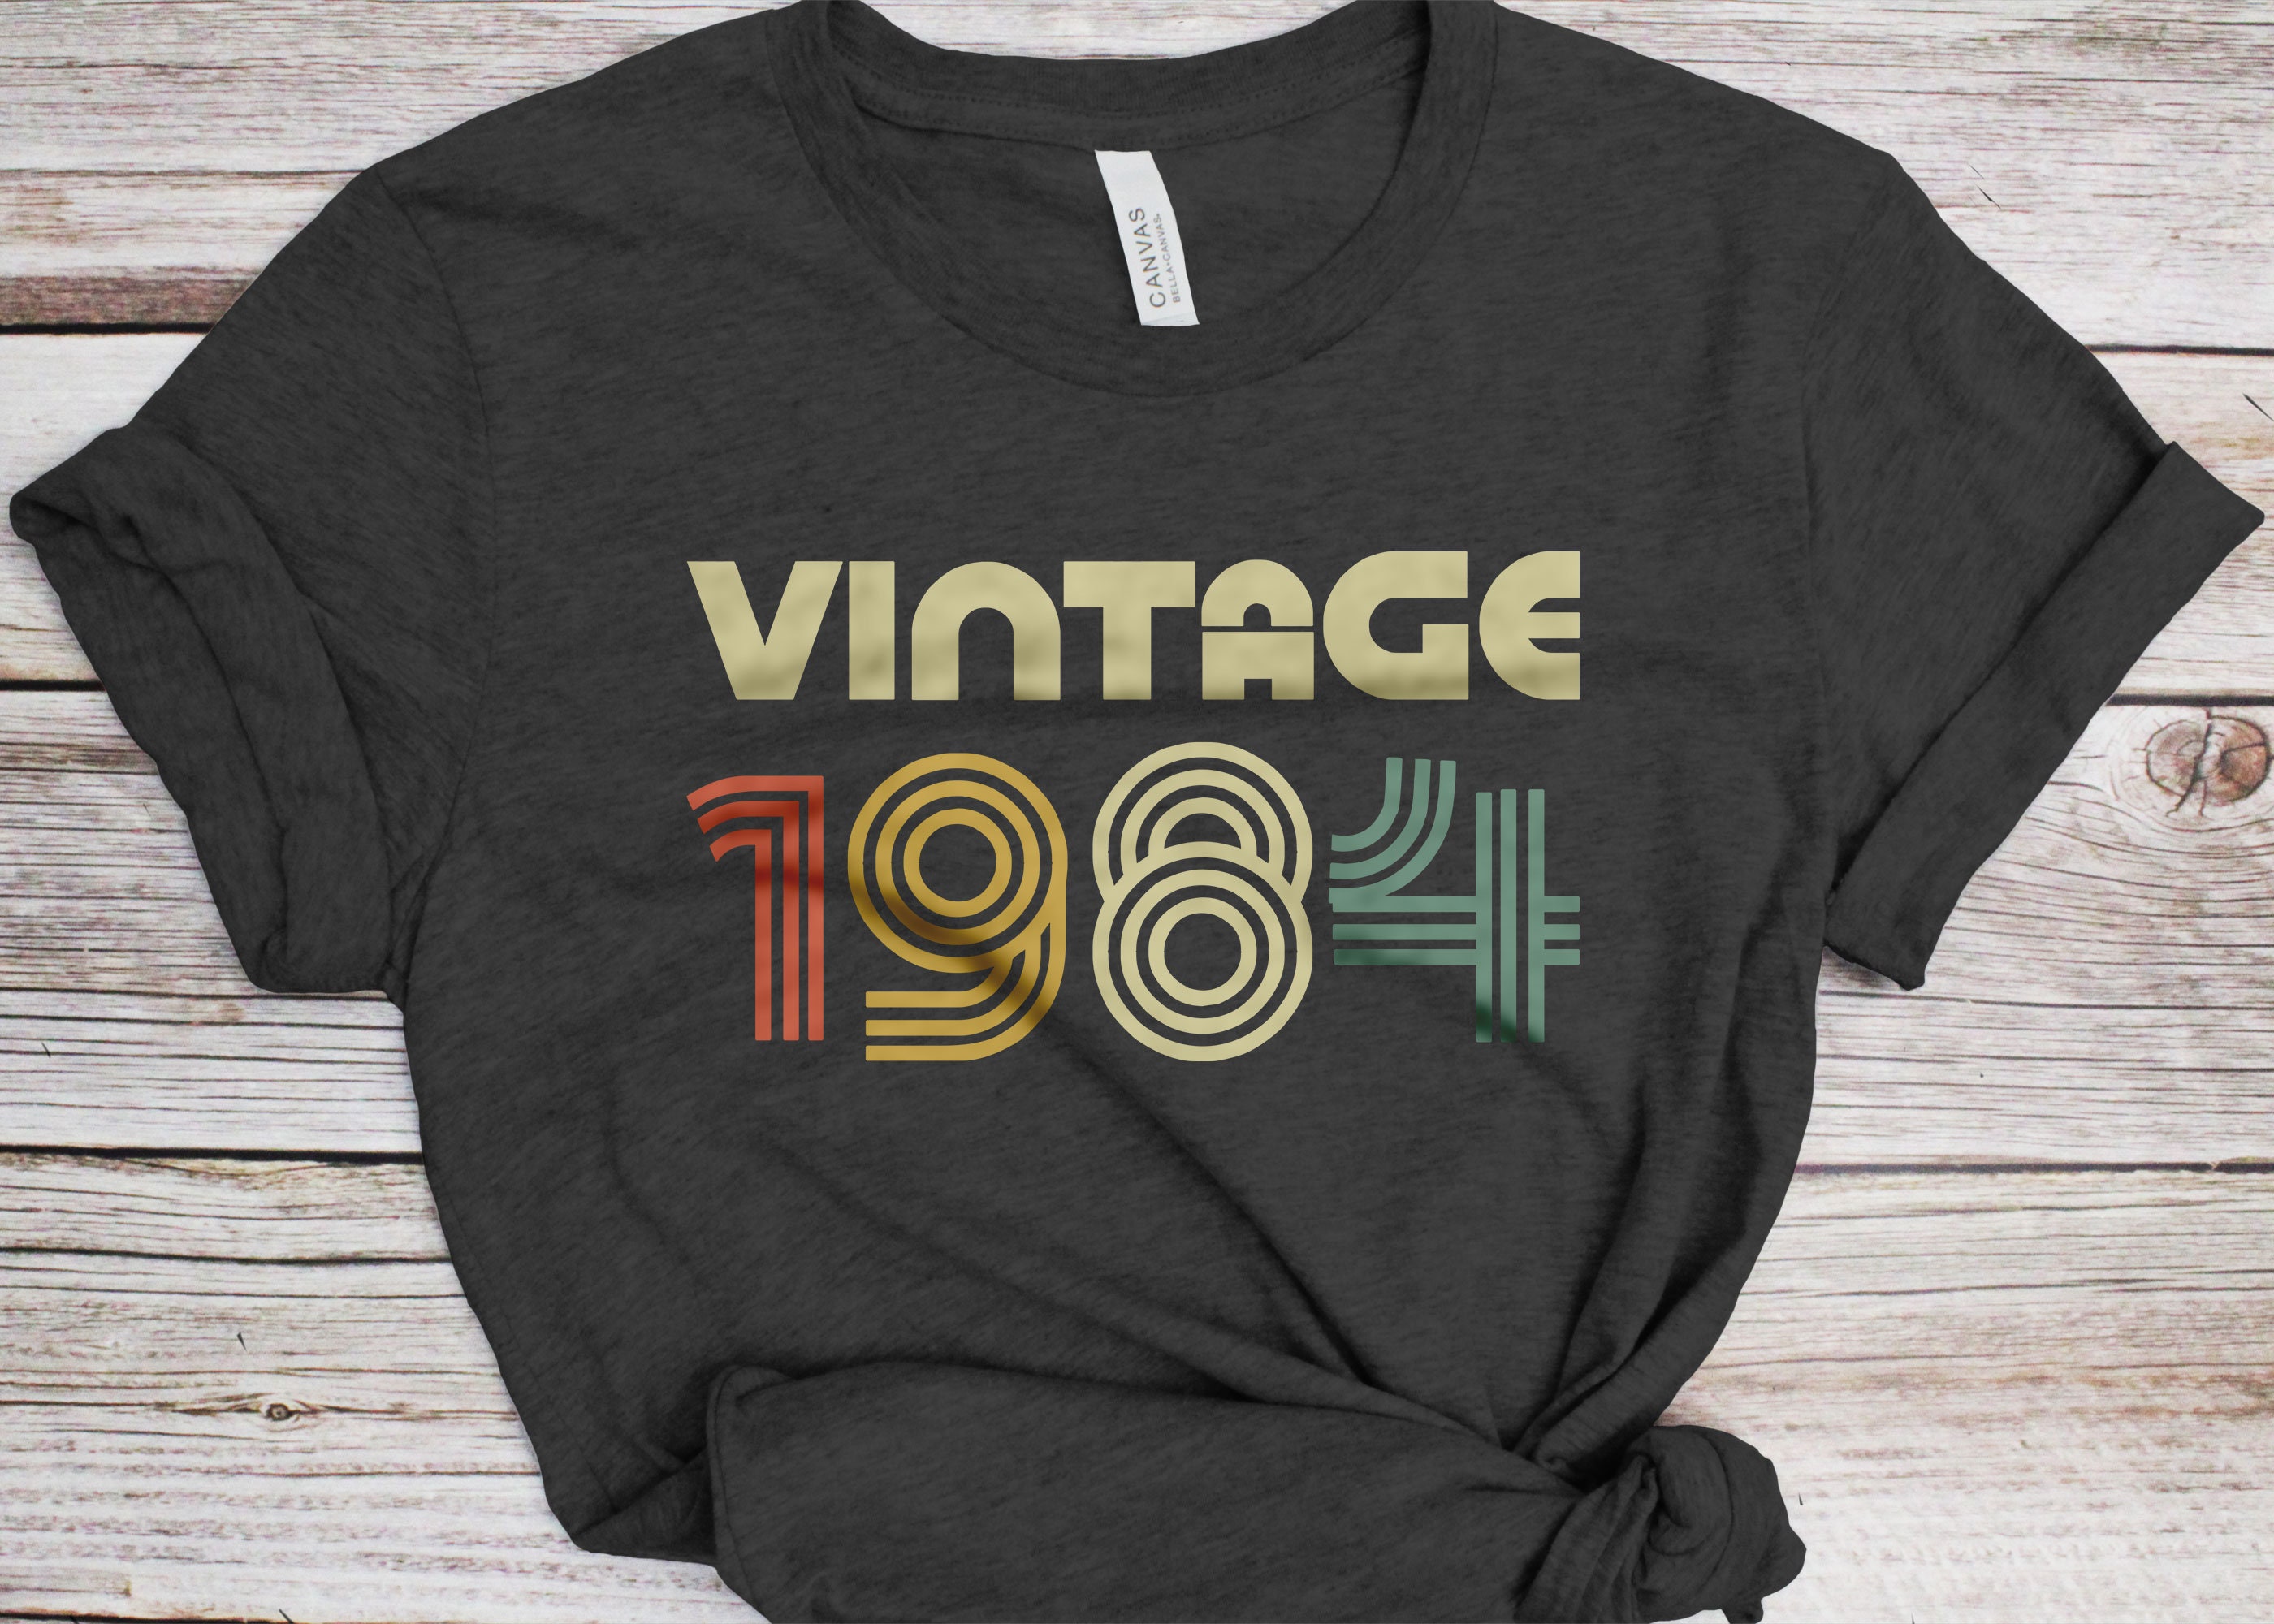 Vintage 1984 T-Shirt - unisex Women Men Funny Retro Font 39th Birthday Shirt - Vintage 1984 Gift Tshirt for Bday Party Christmas